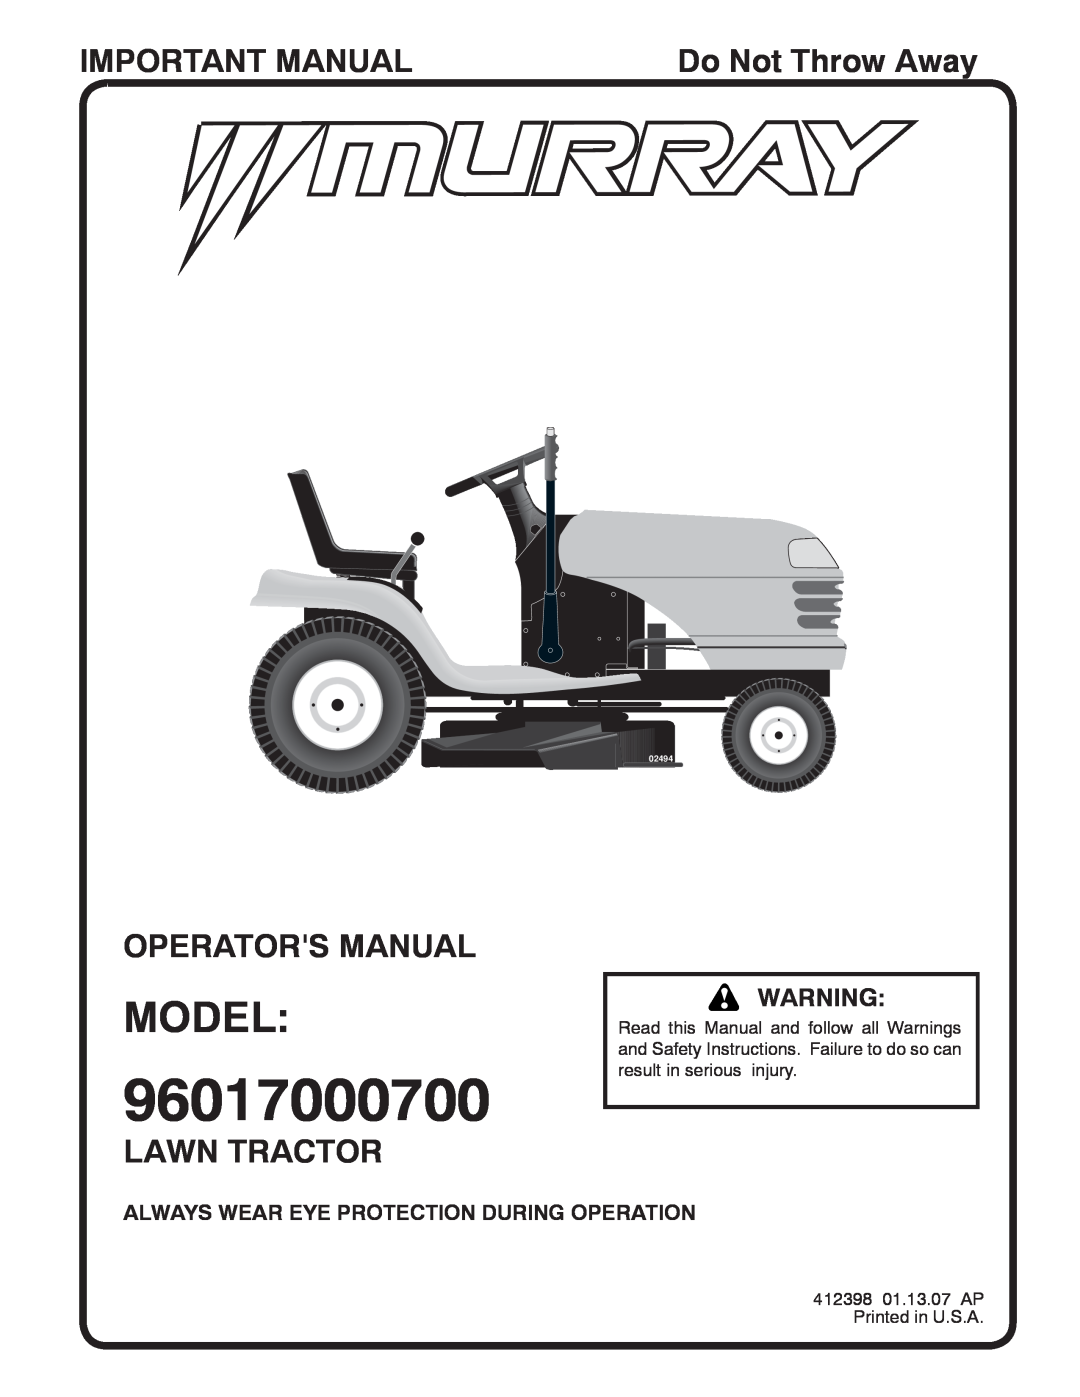 Murray 96017000700 manual Model, Important Manual, Operators Manual, Lawn Tractor, Do Not Throw Away,  